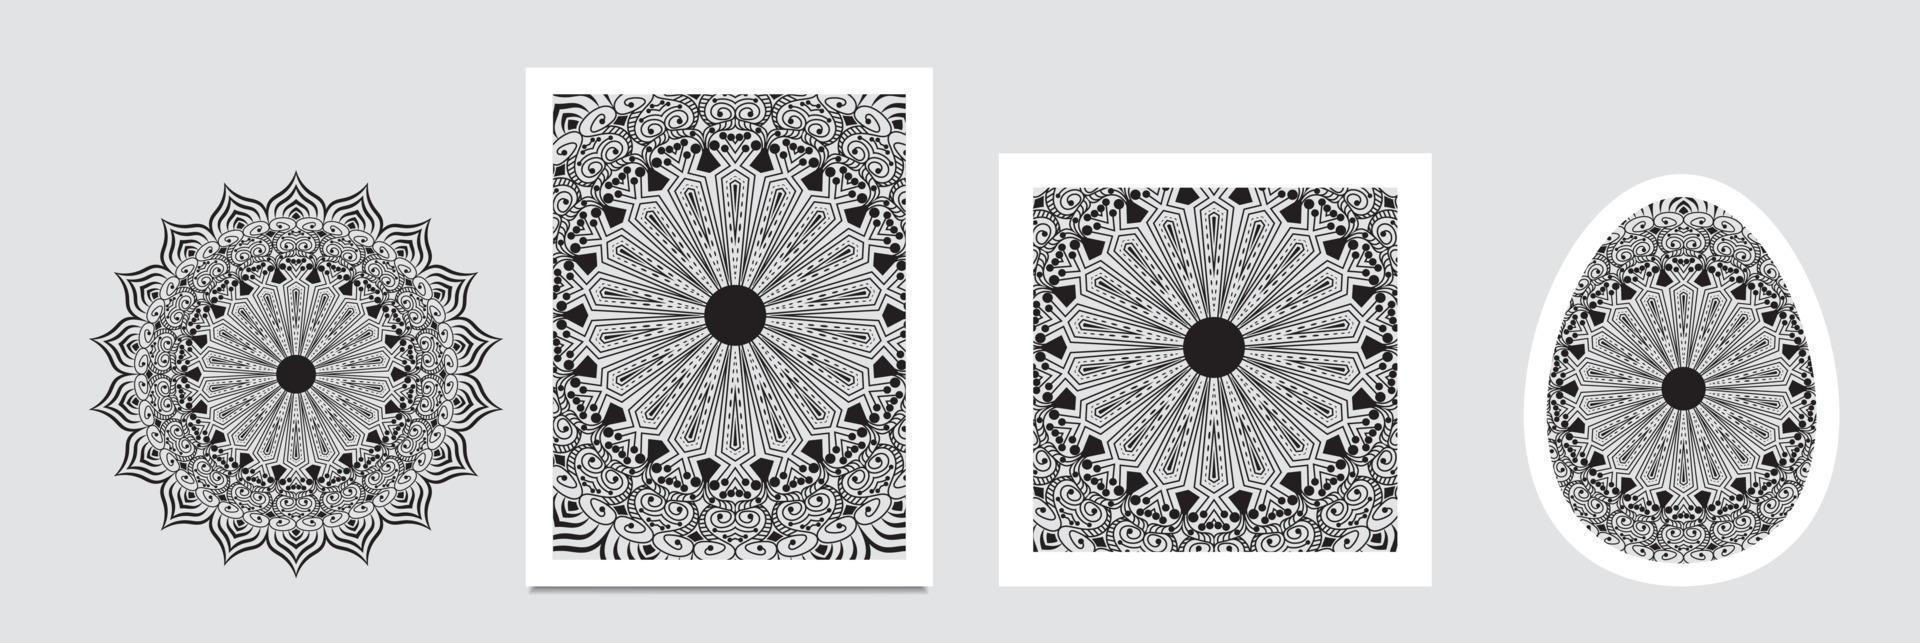 ethnische bunte runde dekorative Henna-Mandala-Blumenhintergrunddesign-Vektorillustration vektor